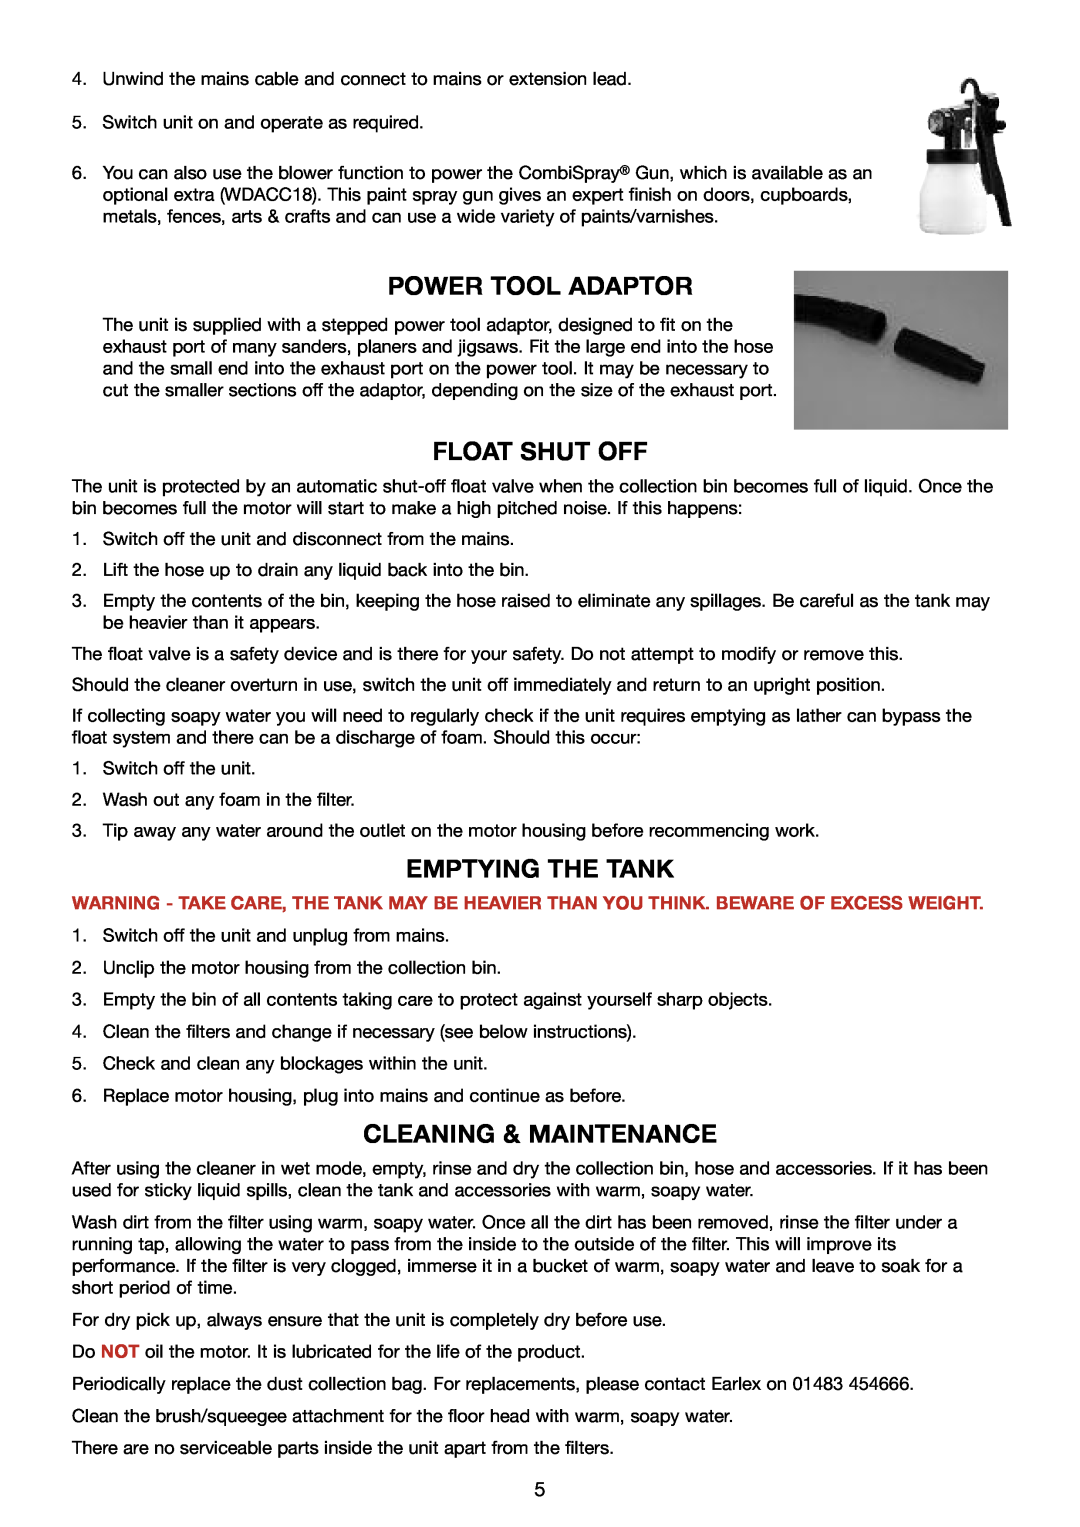 Earlex WD1200P manual Power Tool Adaptor, Float Shut Off, EMPTYINg THE TANK, CLEANINg & MAINTENANCE 